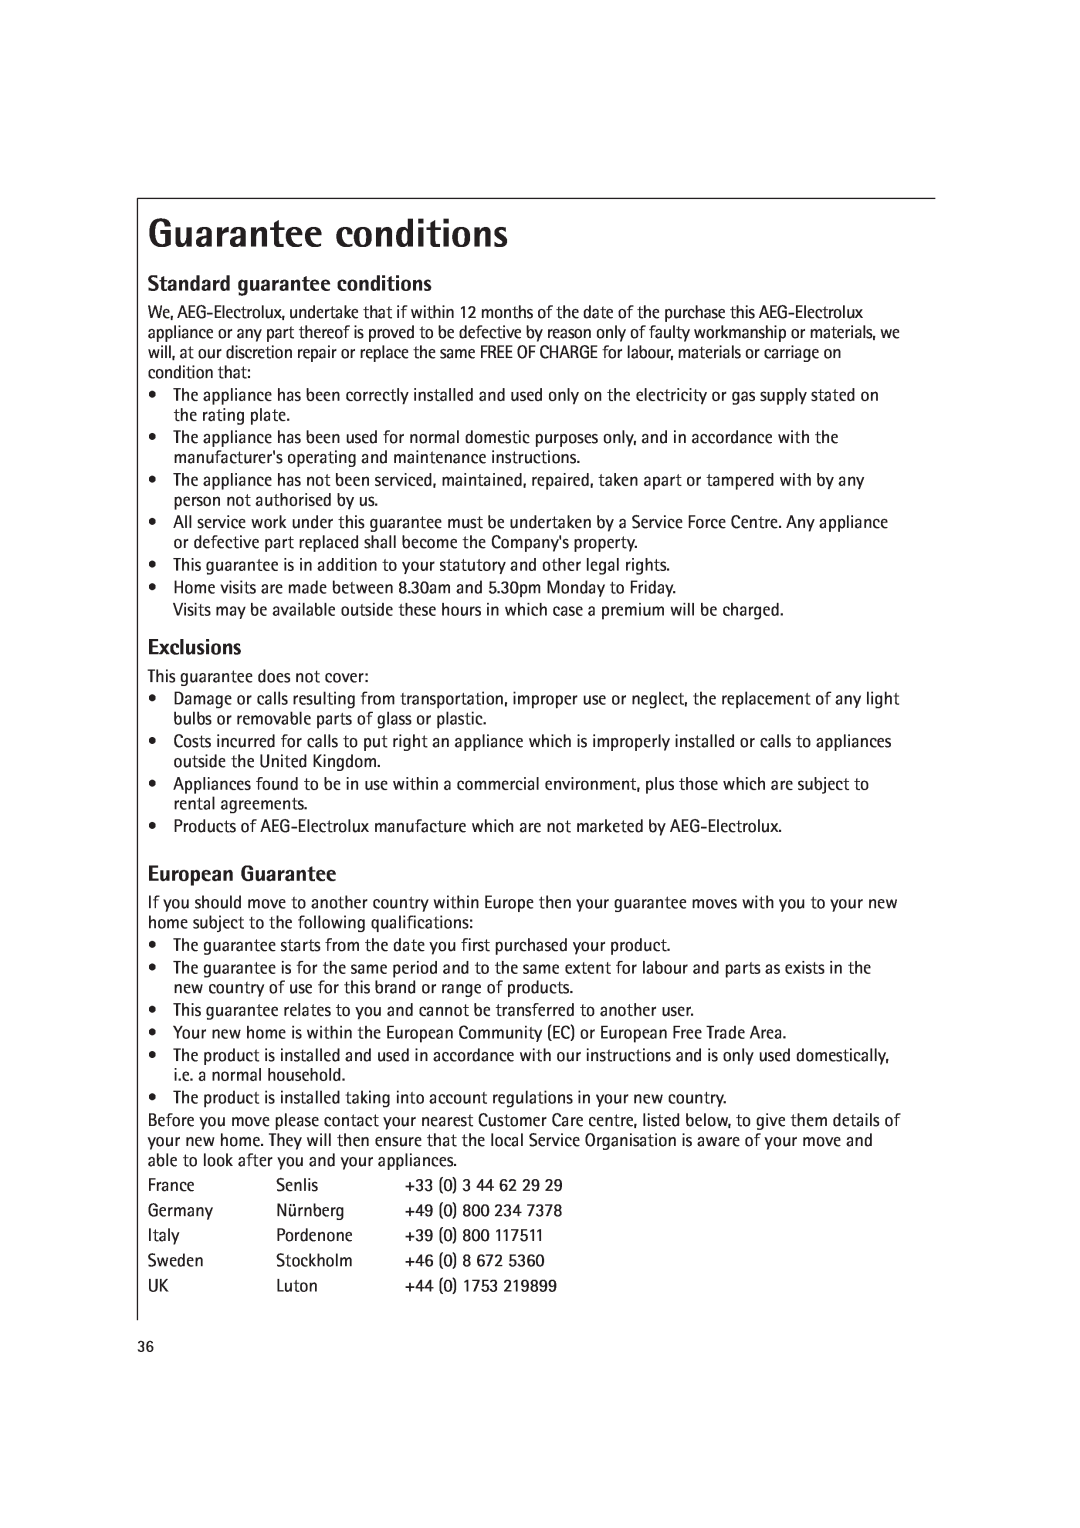 Electrolux MCC4060E Guarantee conditions, Standard guarantee conditions, Exclusions, European Guarantee 